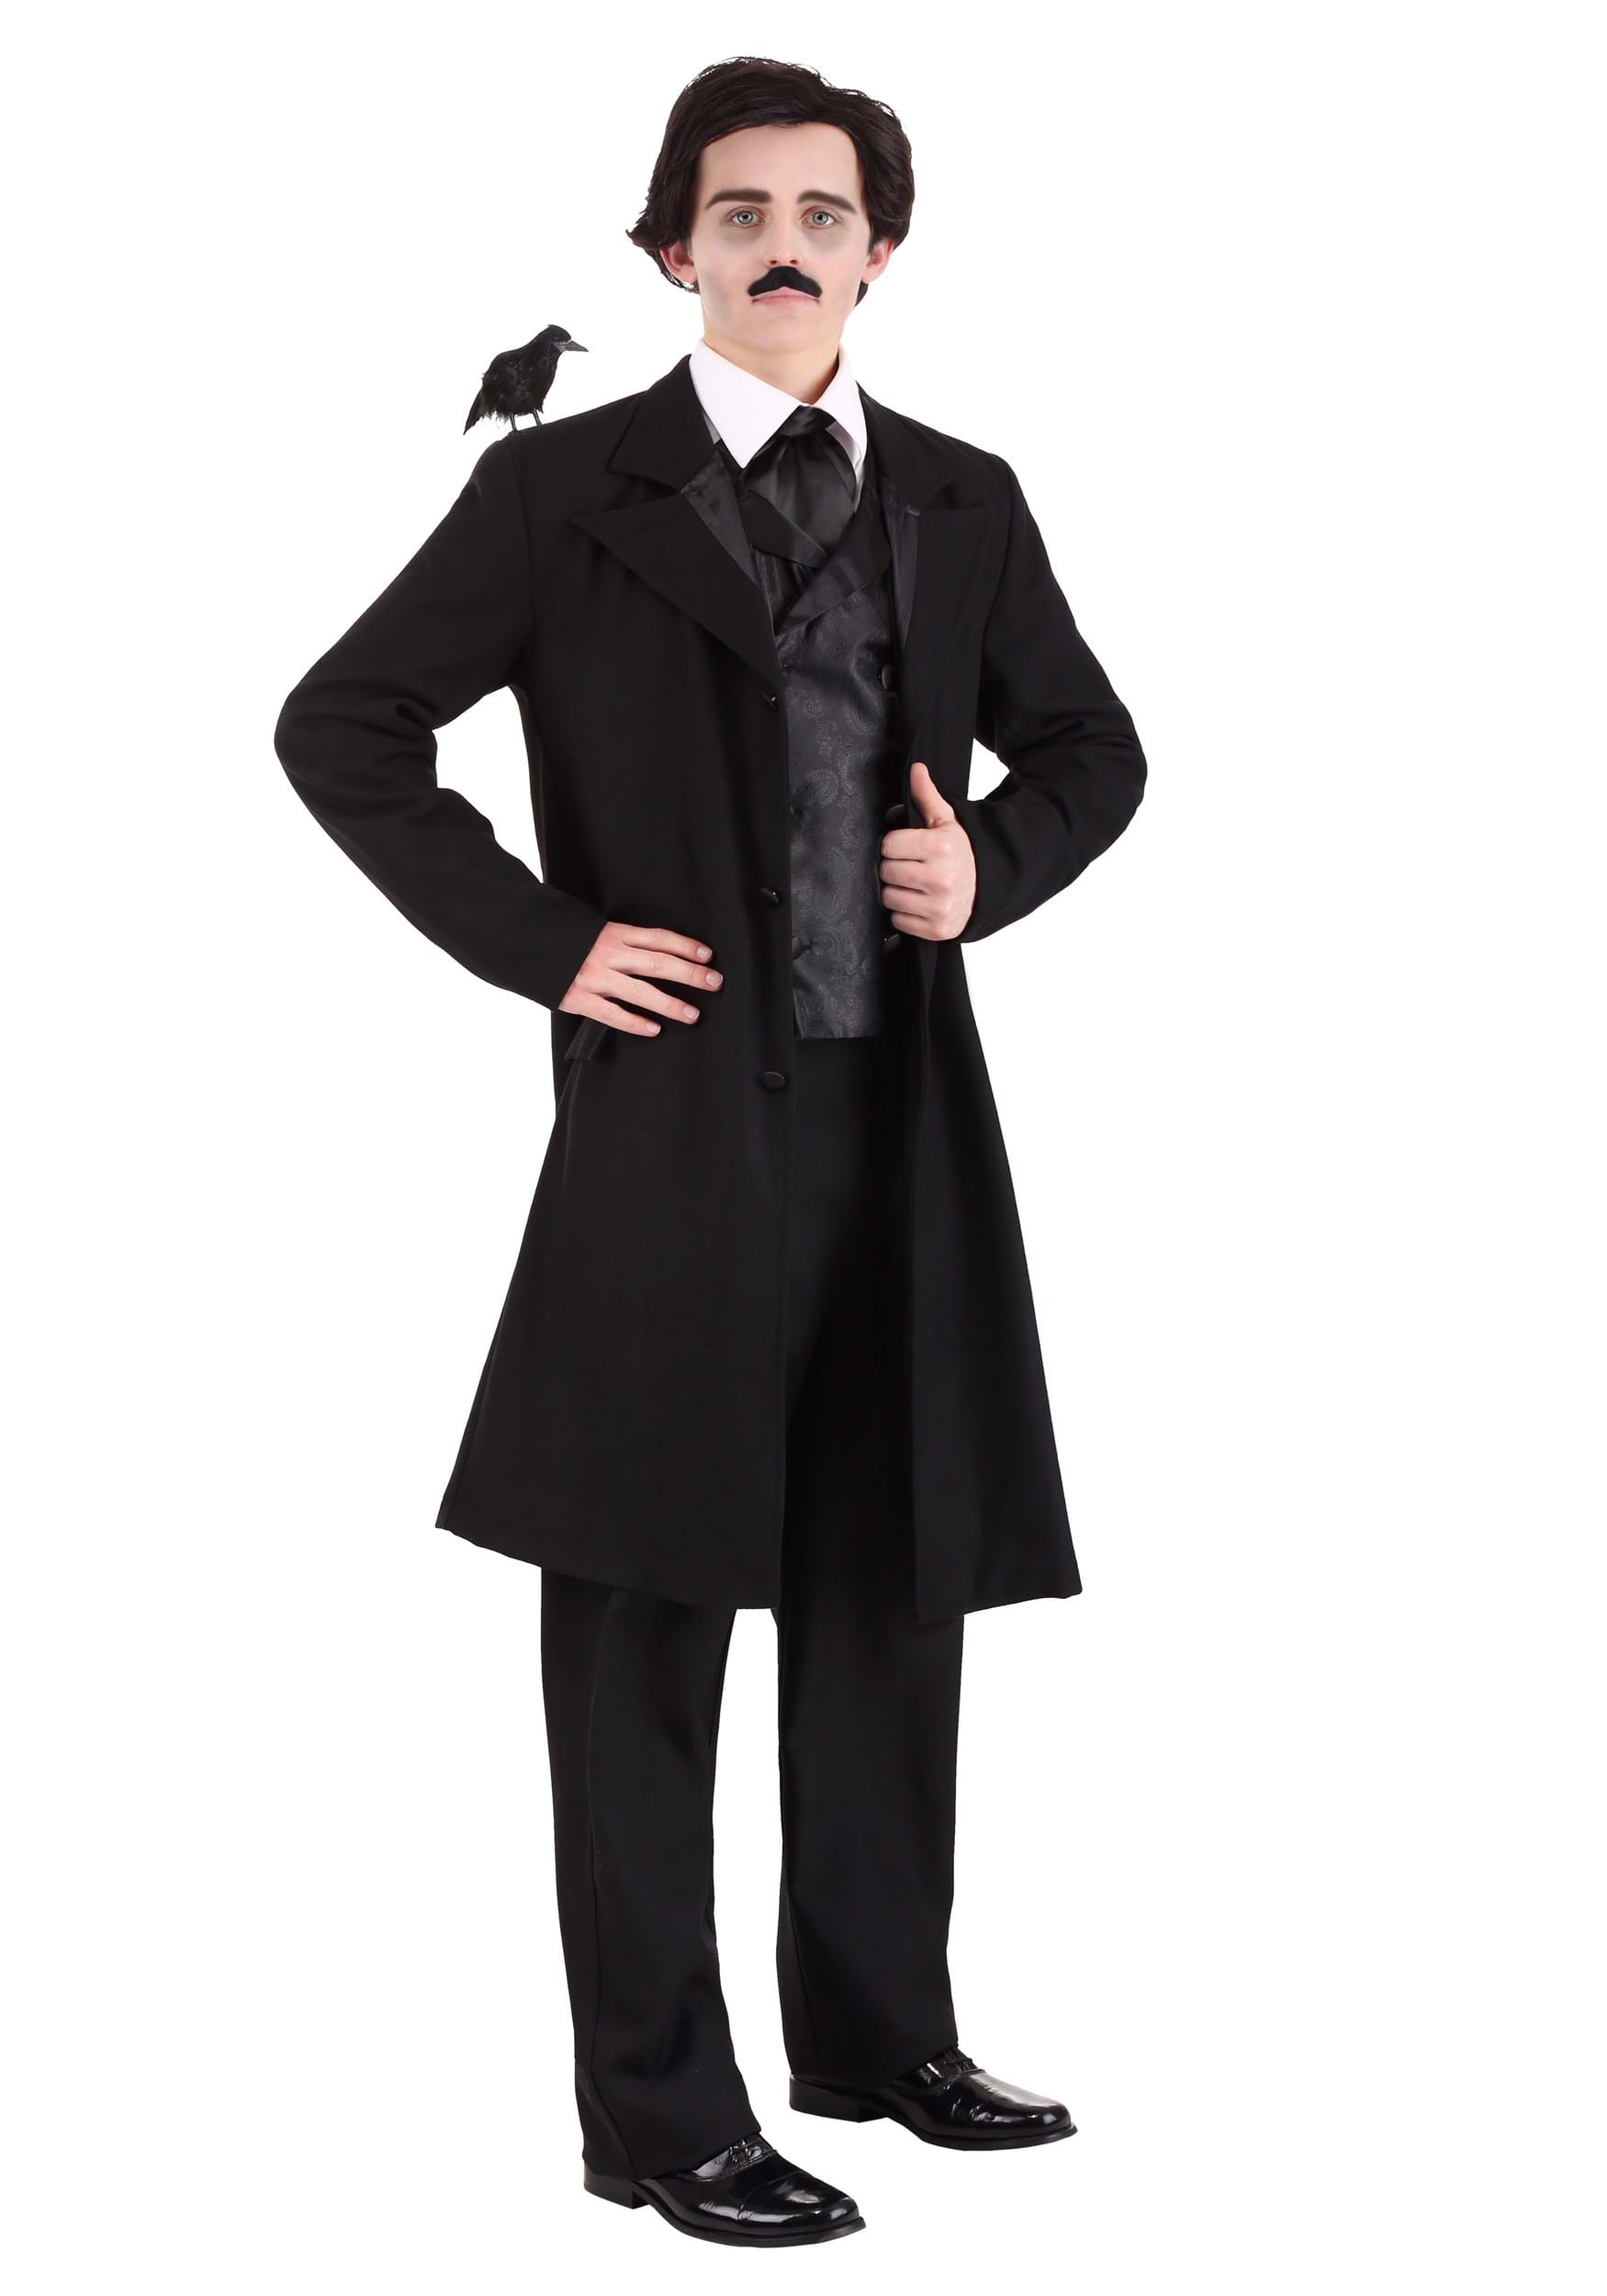 Photos - Fancy Dress FUN Costumes Exclusive Edgar Allan Poe Costume for Men Black FUN0998AD